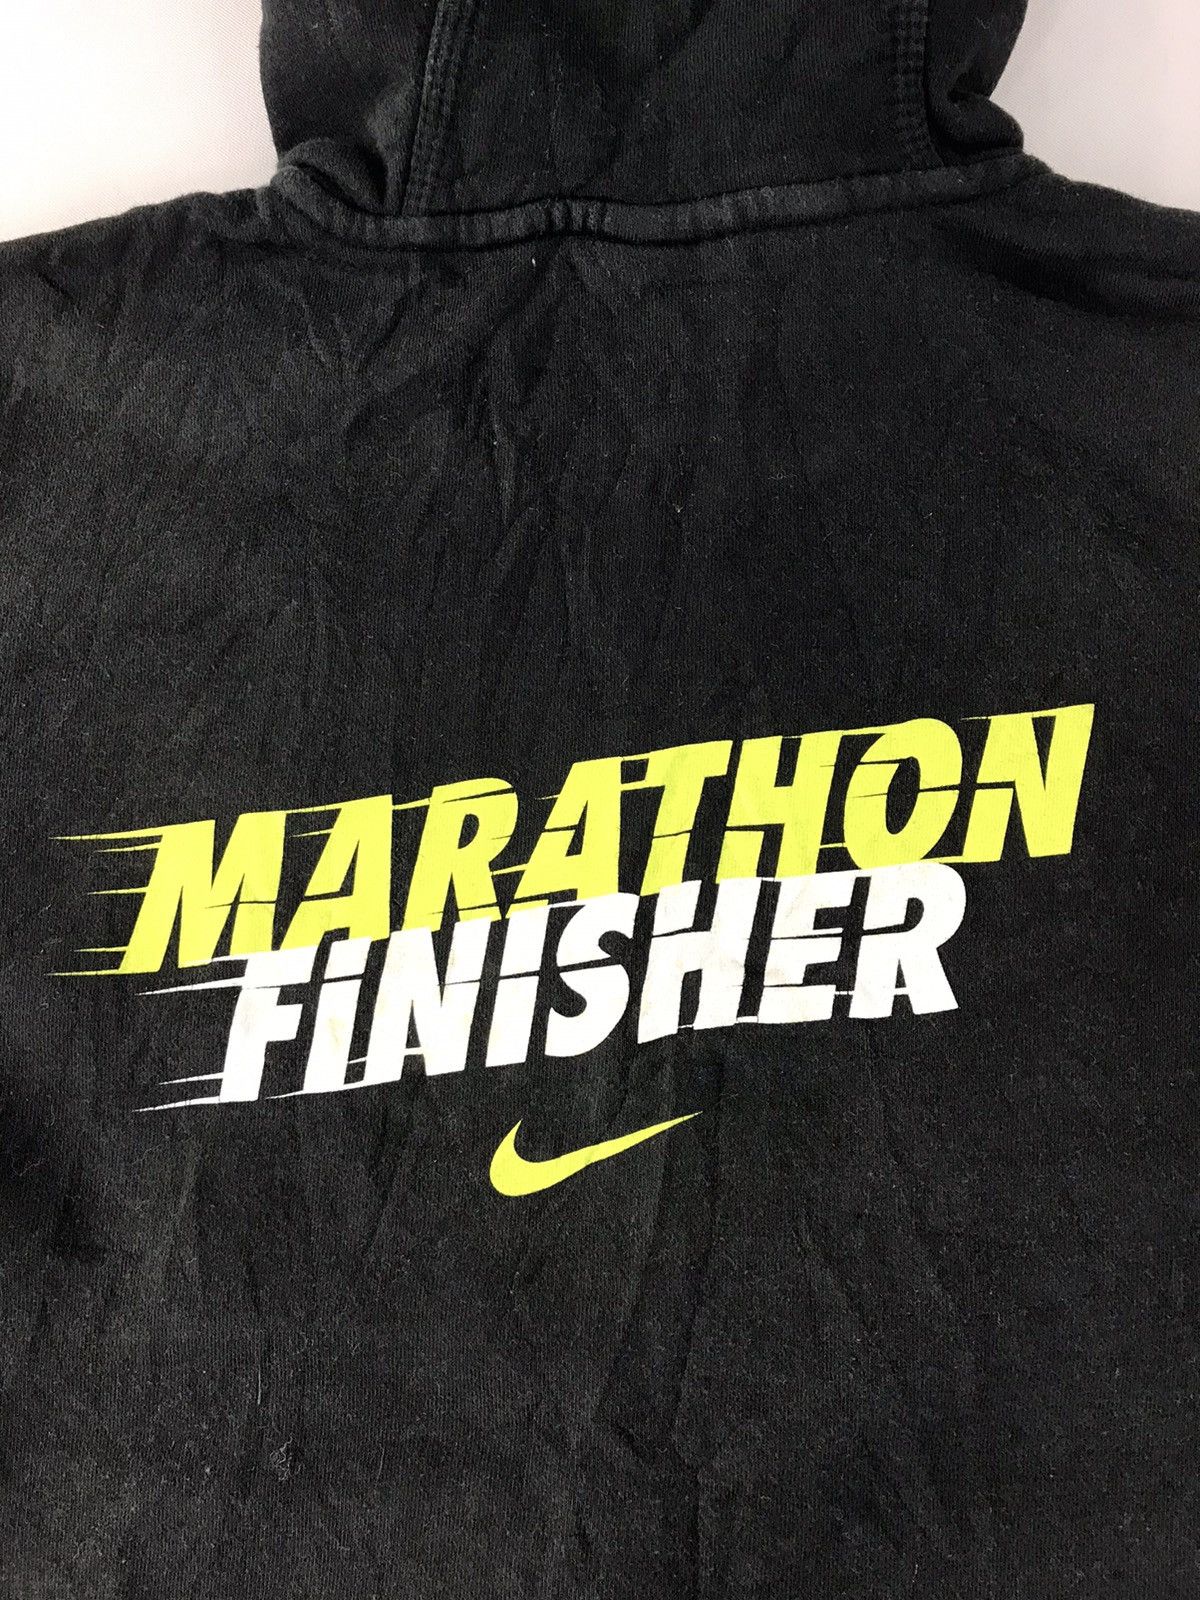 Nike Nike Marathon Finisher Student Run LA Hoodies Jacket Zip Up Size US M / EU 48-50 / 2 - 6 Thumbnail